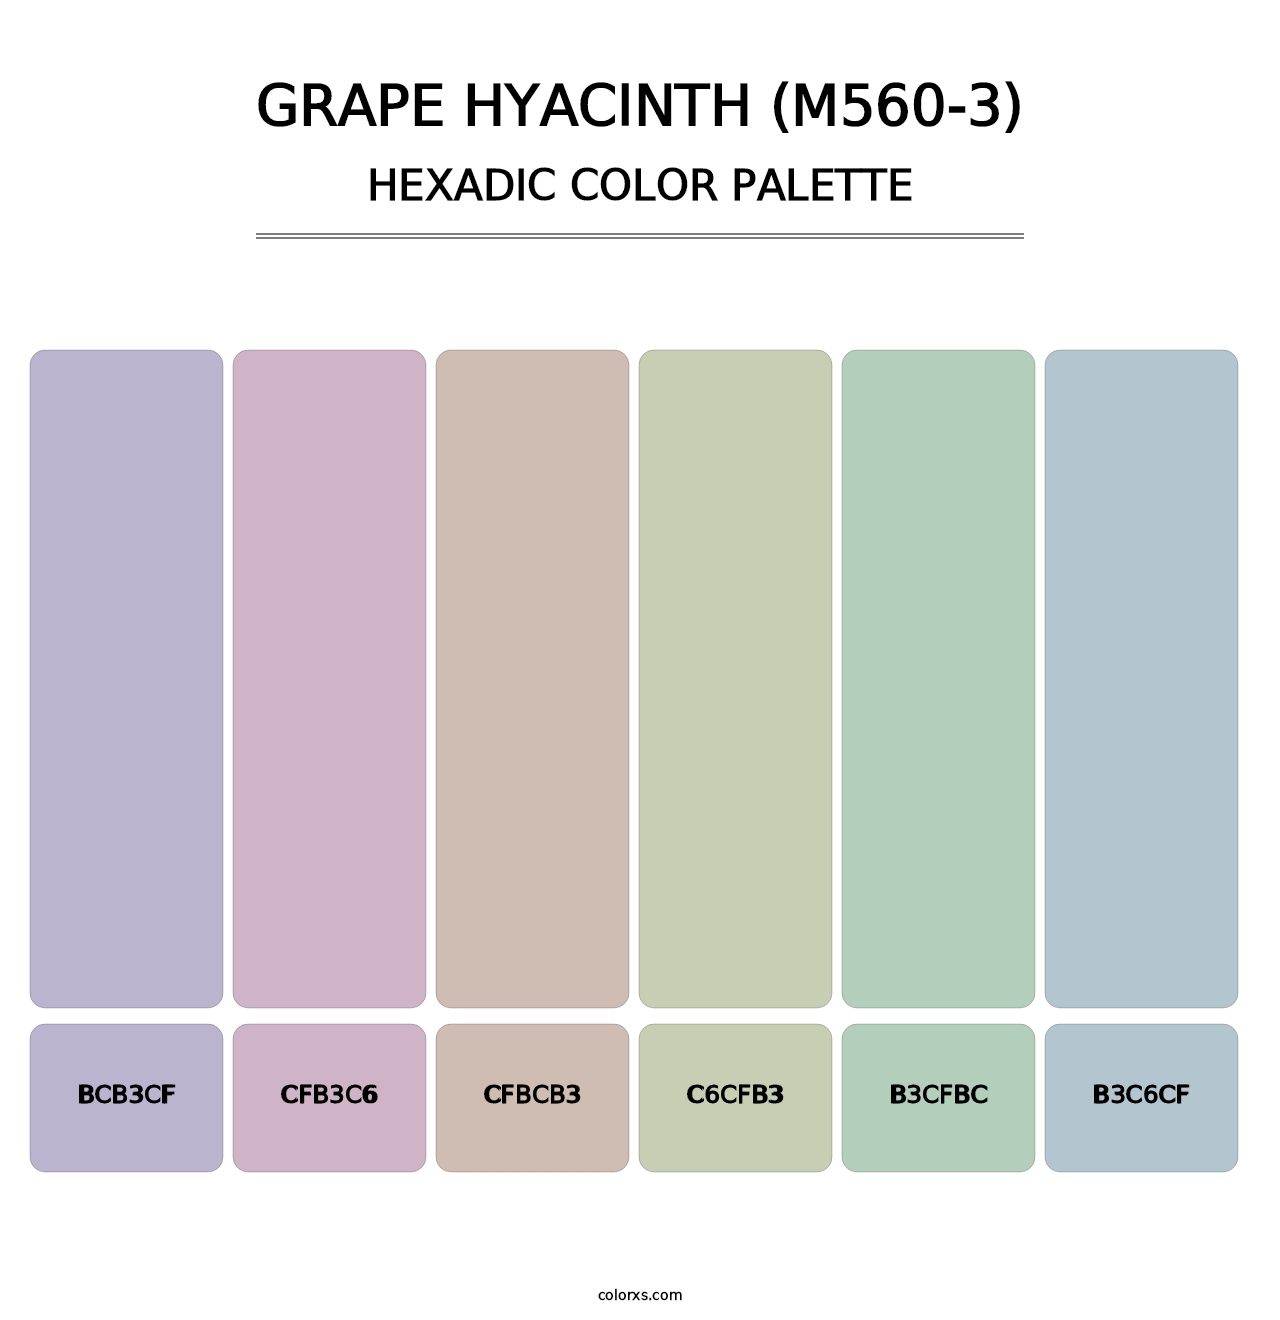 Grape Hyacinth (M560-3) - Hexadic Color Palette